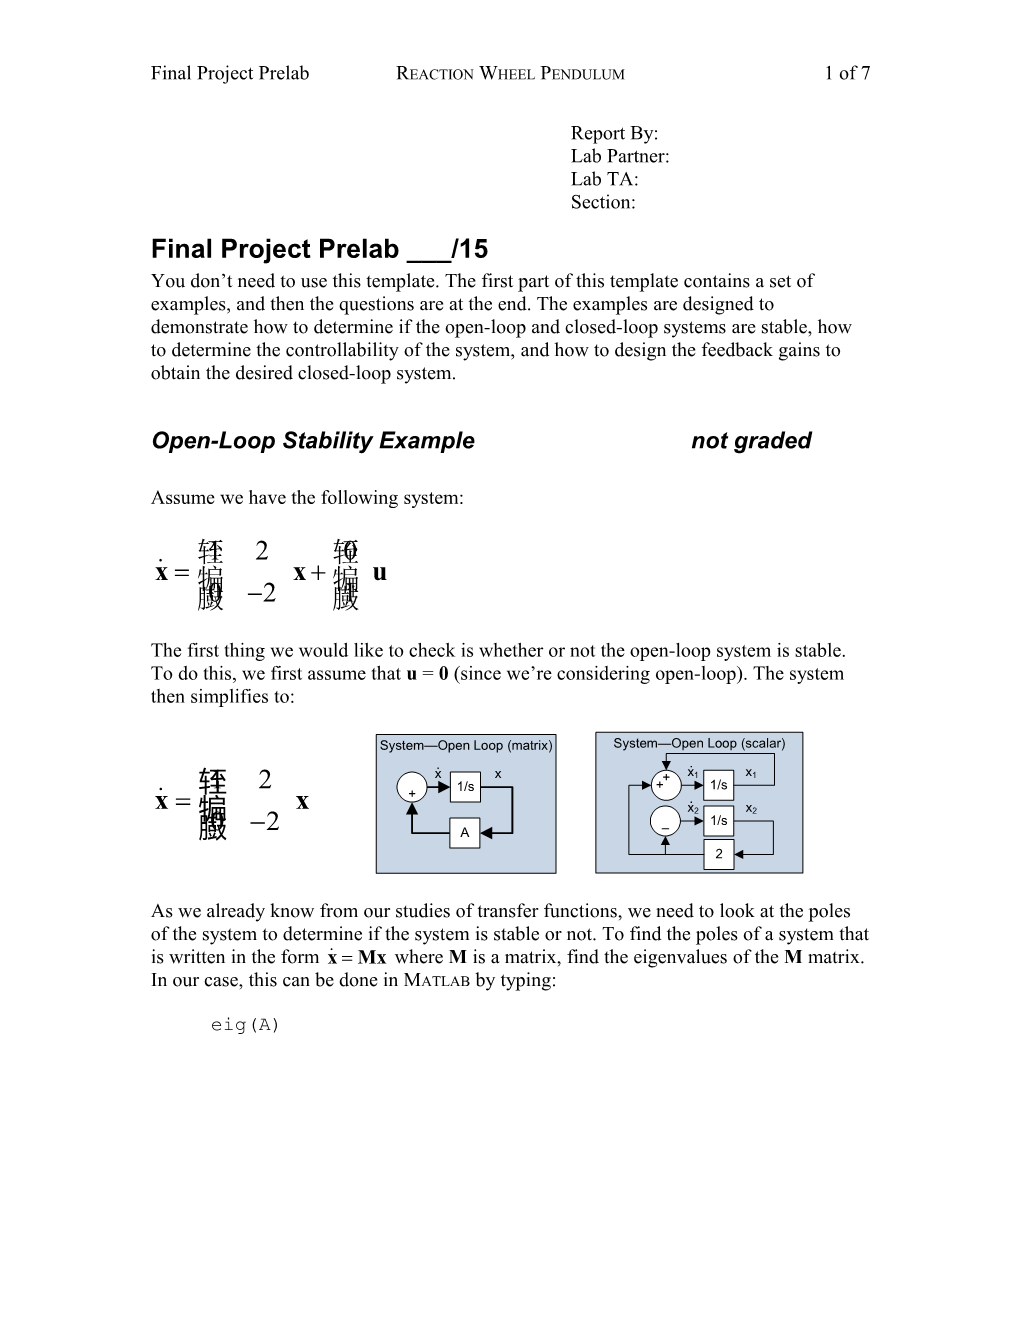 Final Project Prelab Reaction Wheel Pendulum 1 of 7